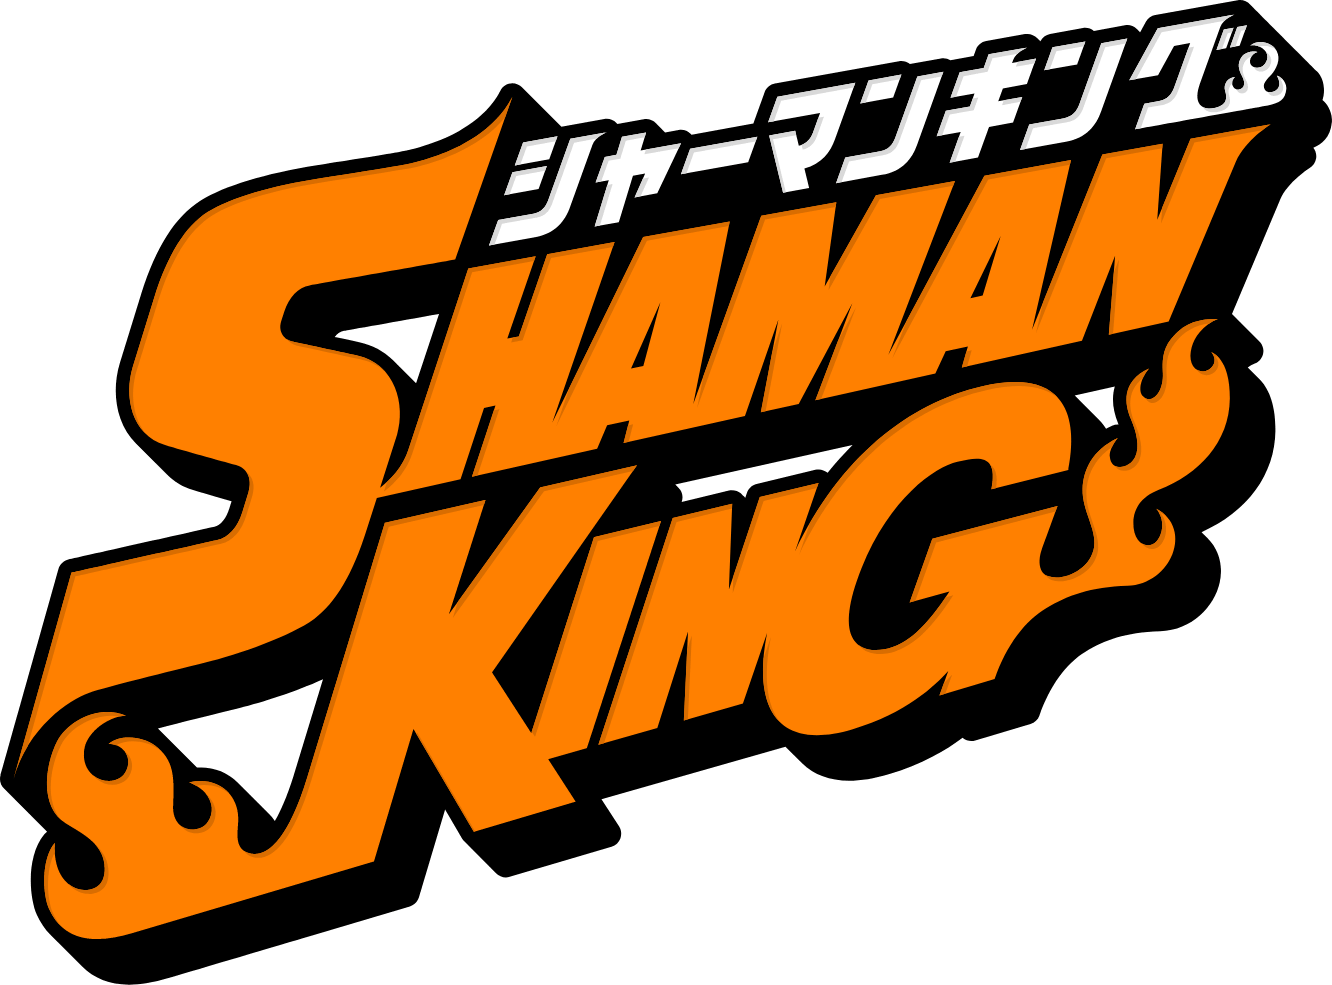 Shaman King (2001 TV series) - Wikipedia